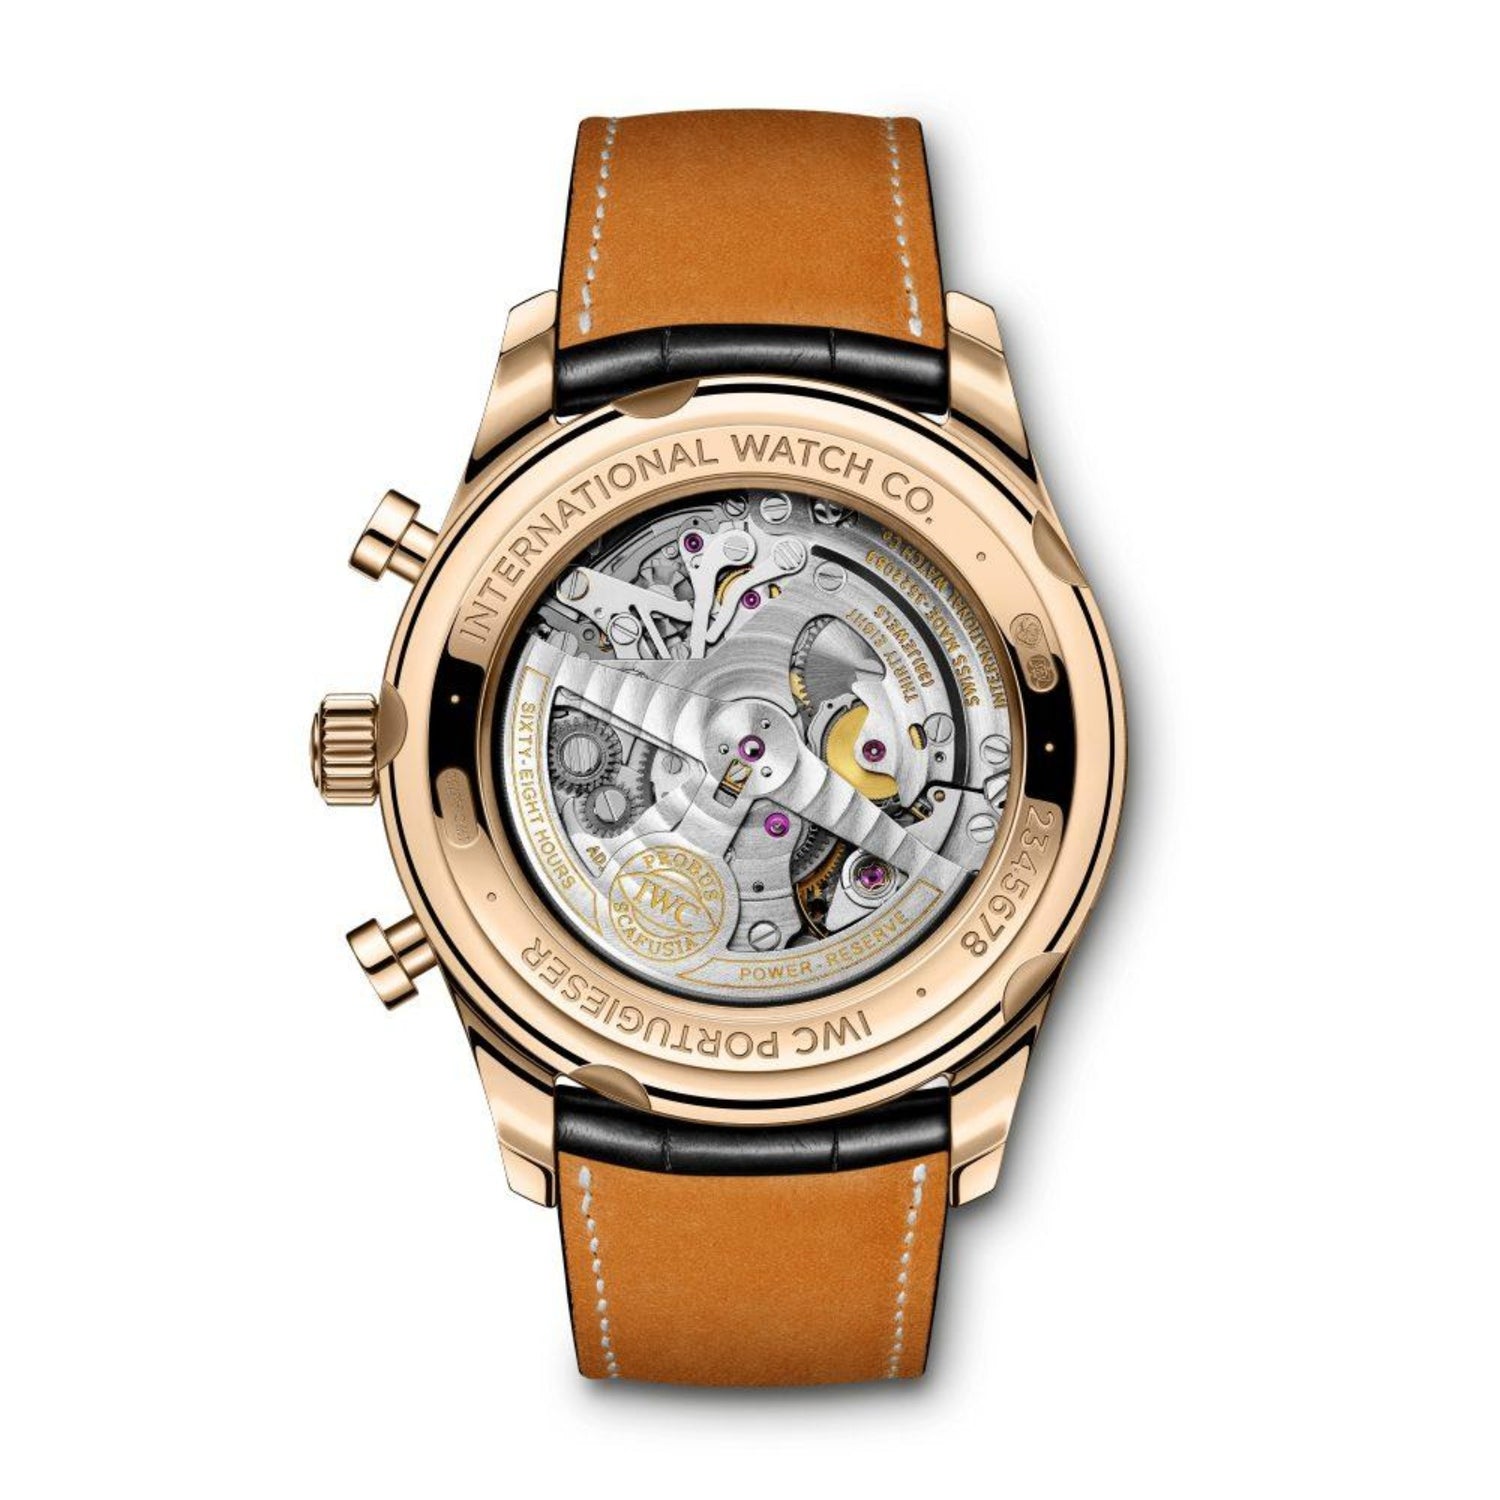 IWC Schaffhausen Portugieser Chronograph Classic Mens Grey Watch IW390405